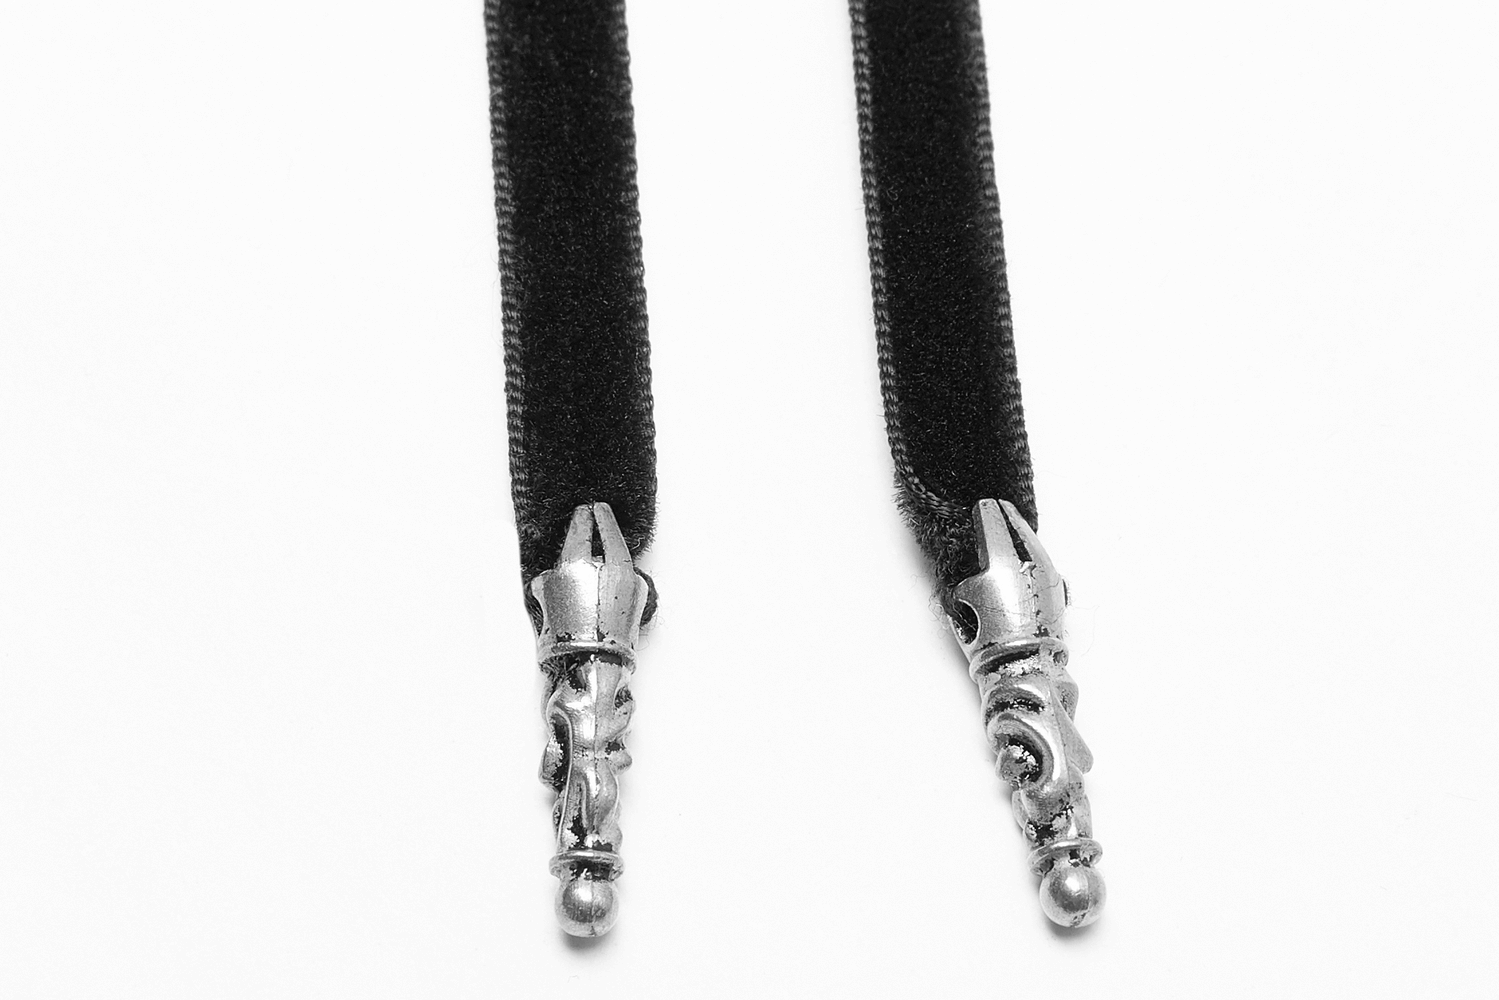 Black Lace-up Jacquard Corset Belt with Metal Buckle